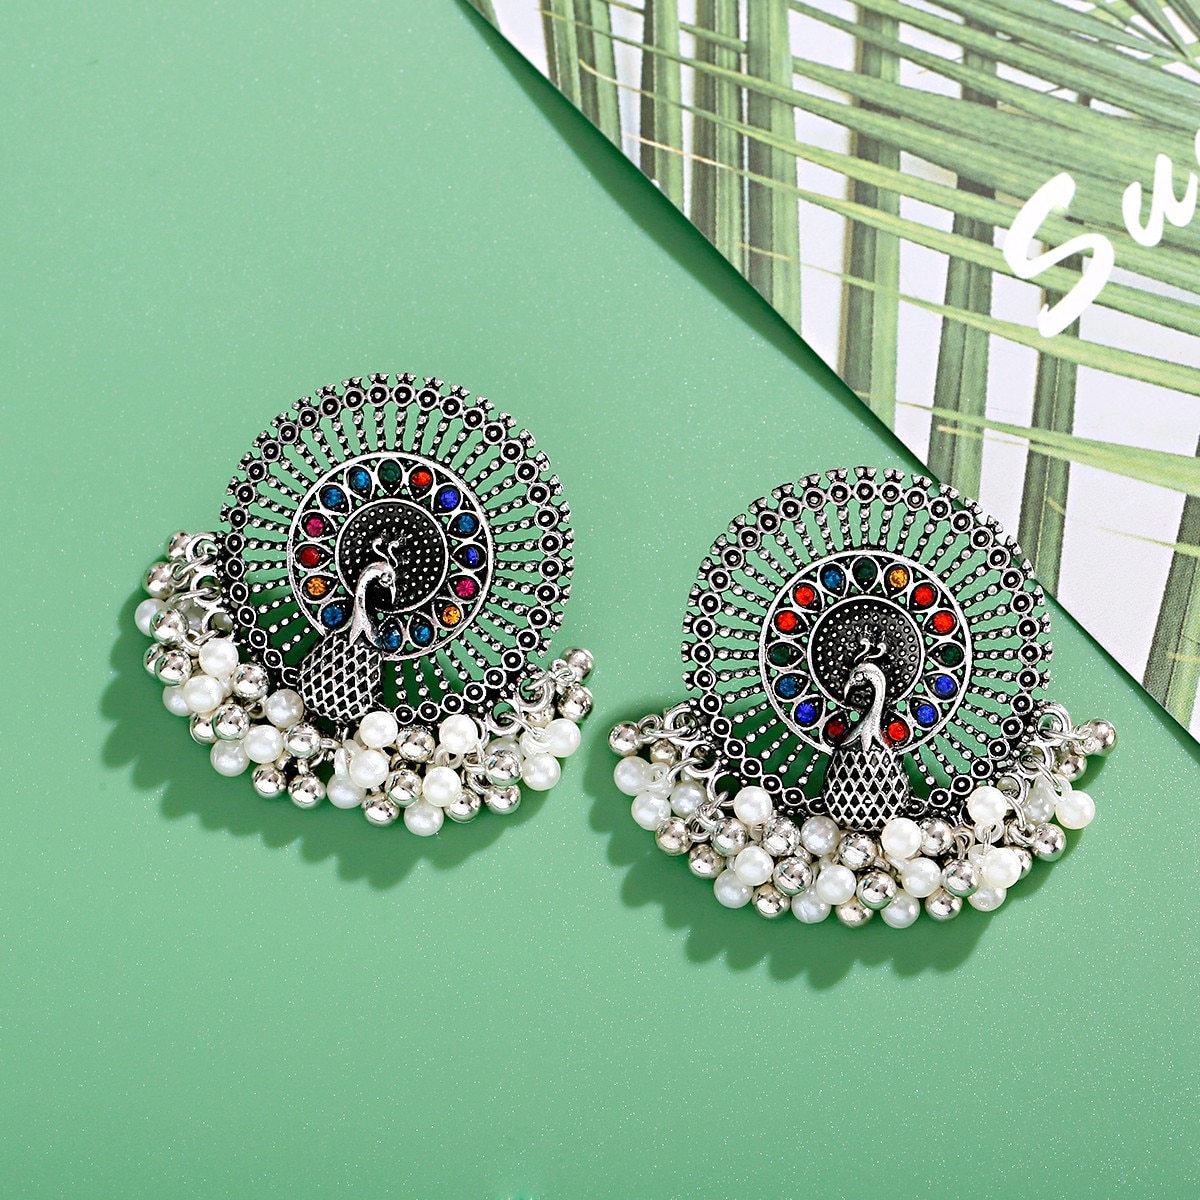 Vintage-Pearl-Bead-Peacock-Shape-Dangle-Earrings-Alloy-Metal-Tassel-Women-Silver-Color-Round-Fashion-1005002651300465-4